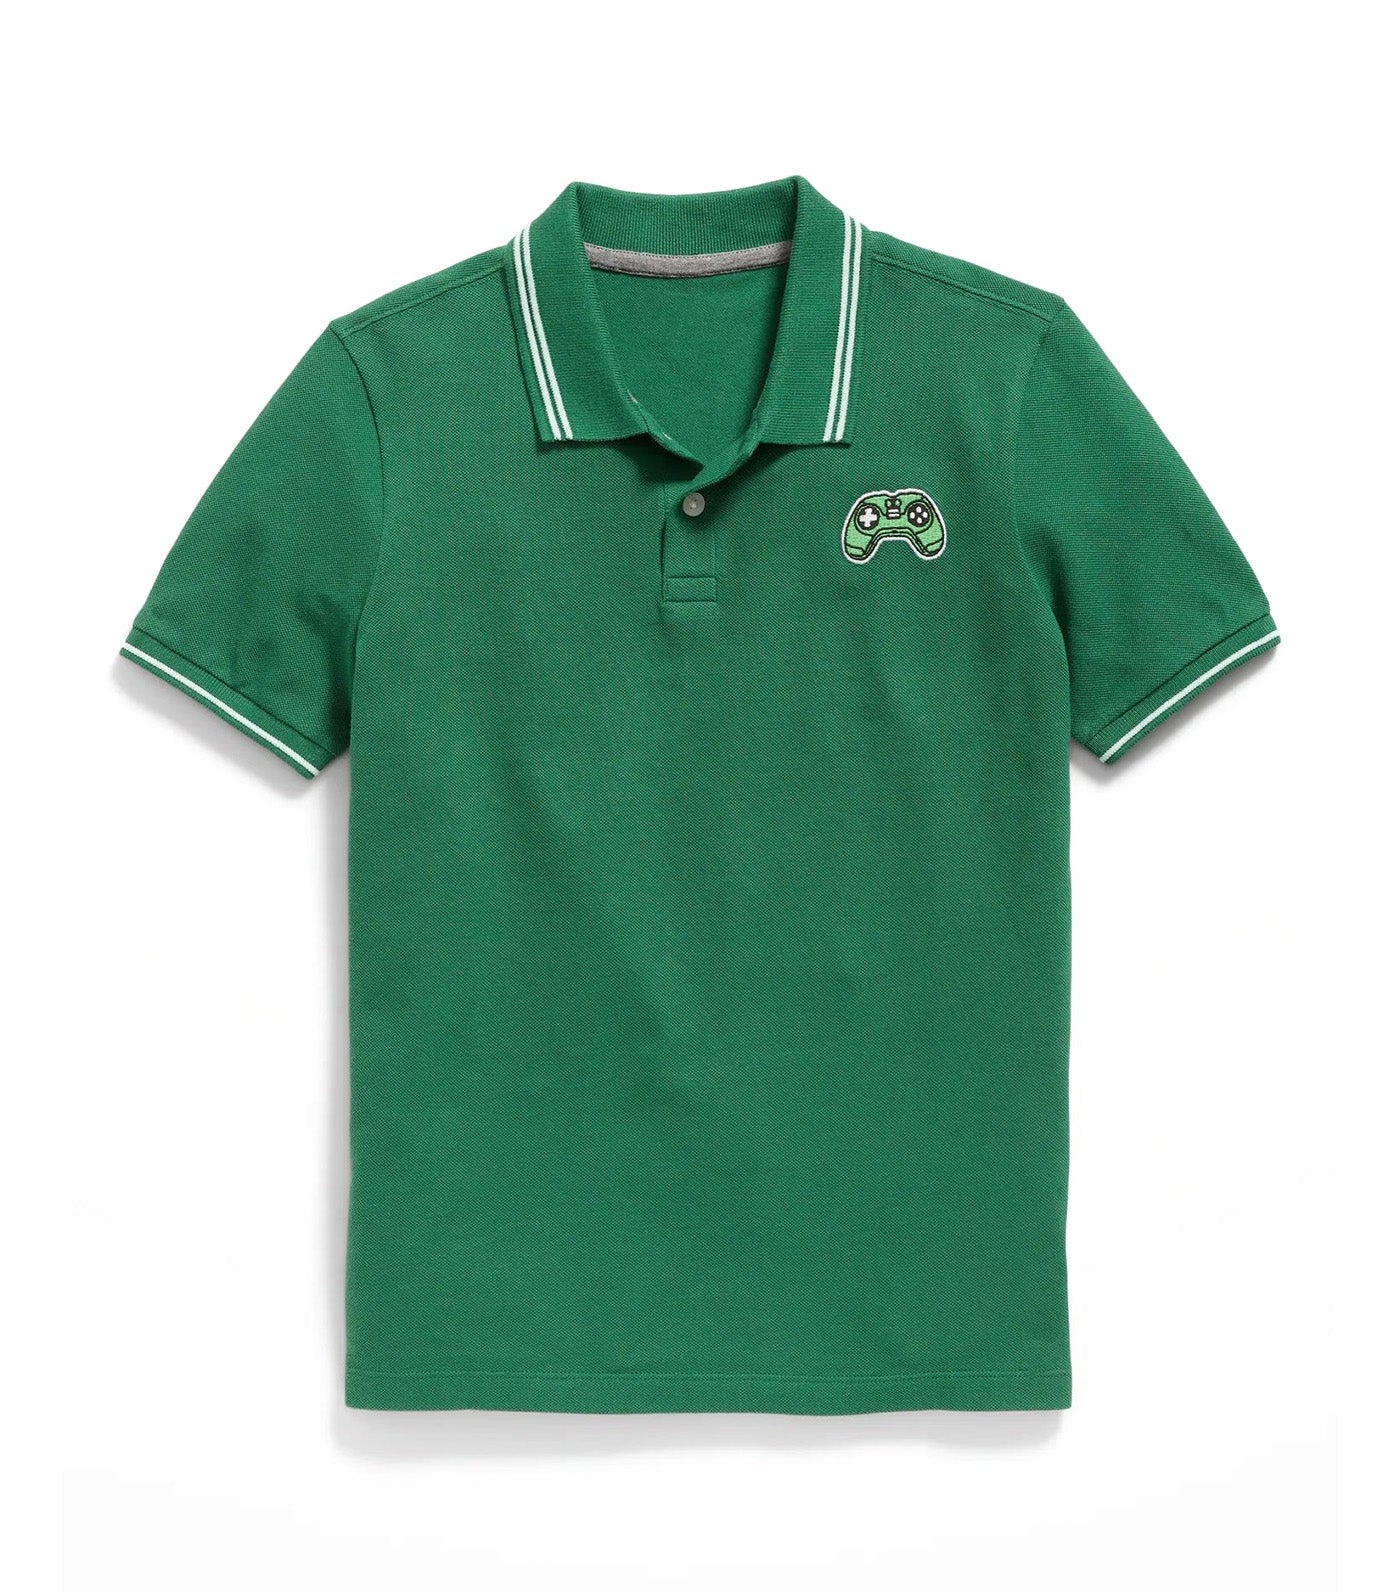 School Uniform Pique Polo Shirt for Boys - Field Day